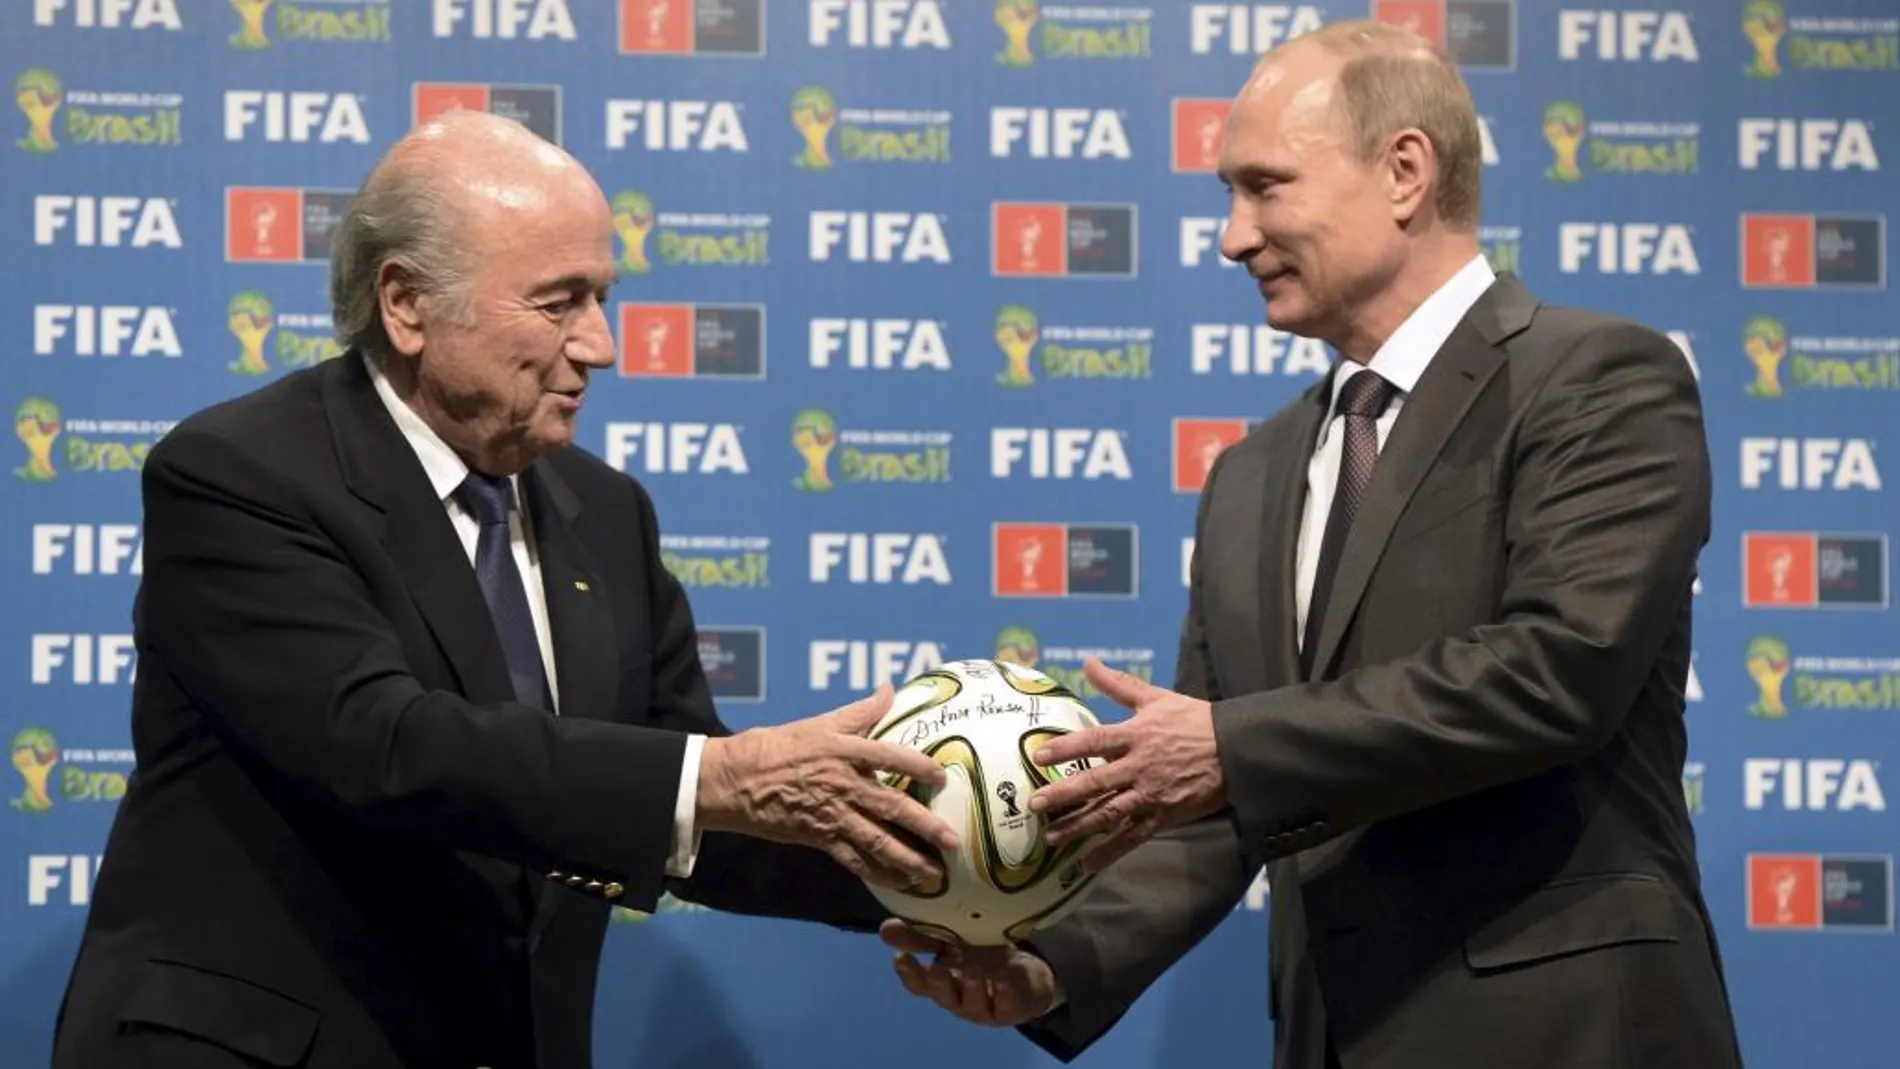 El presidente ruso Vladimir Putin, junto al máximo dirigente de la FIFA, Sepp Blatter